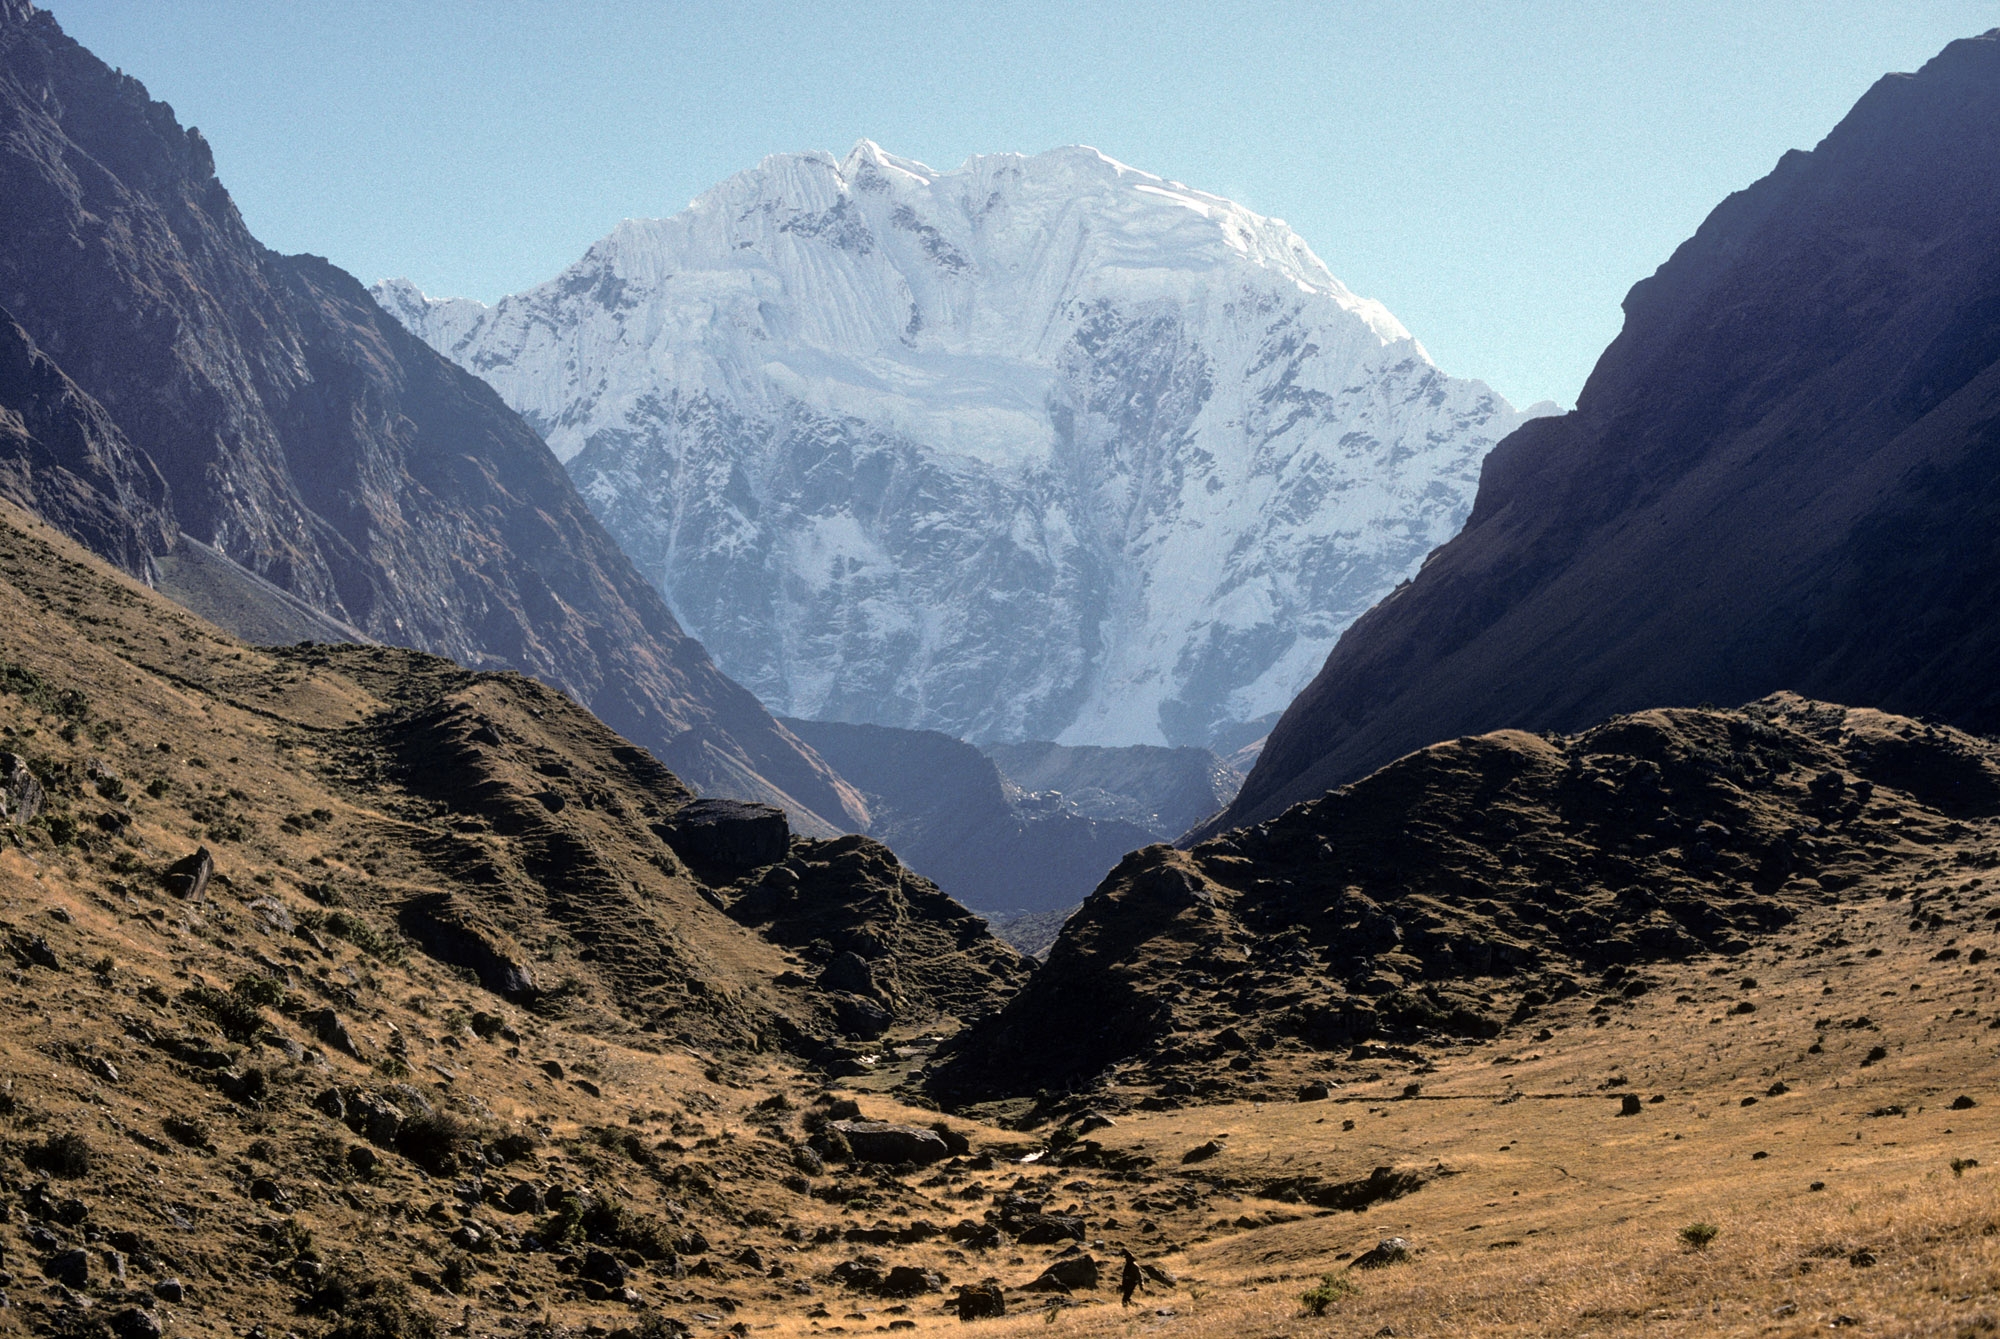 Photo of the Rio Blanco Valley, Peru.